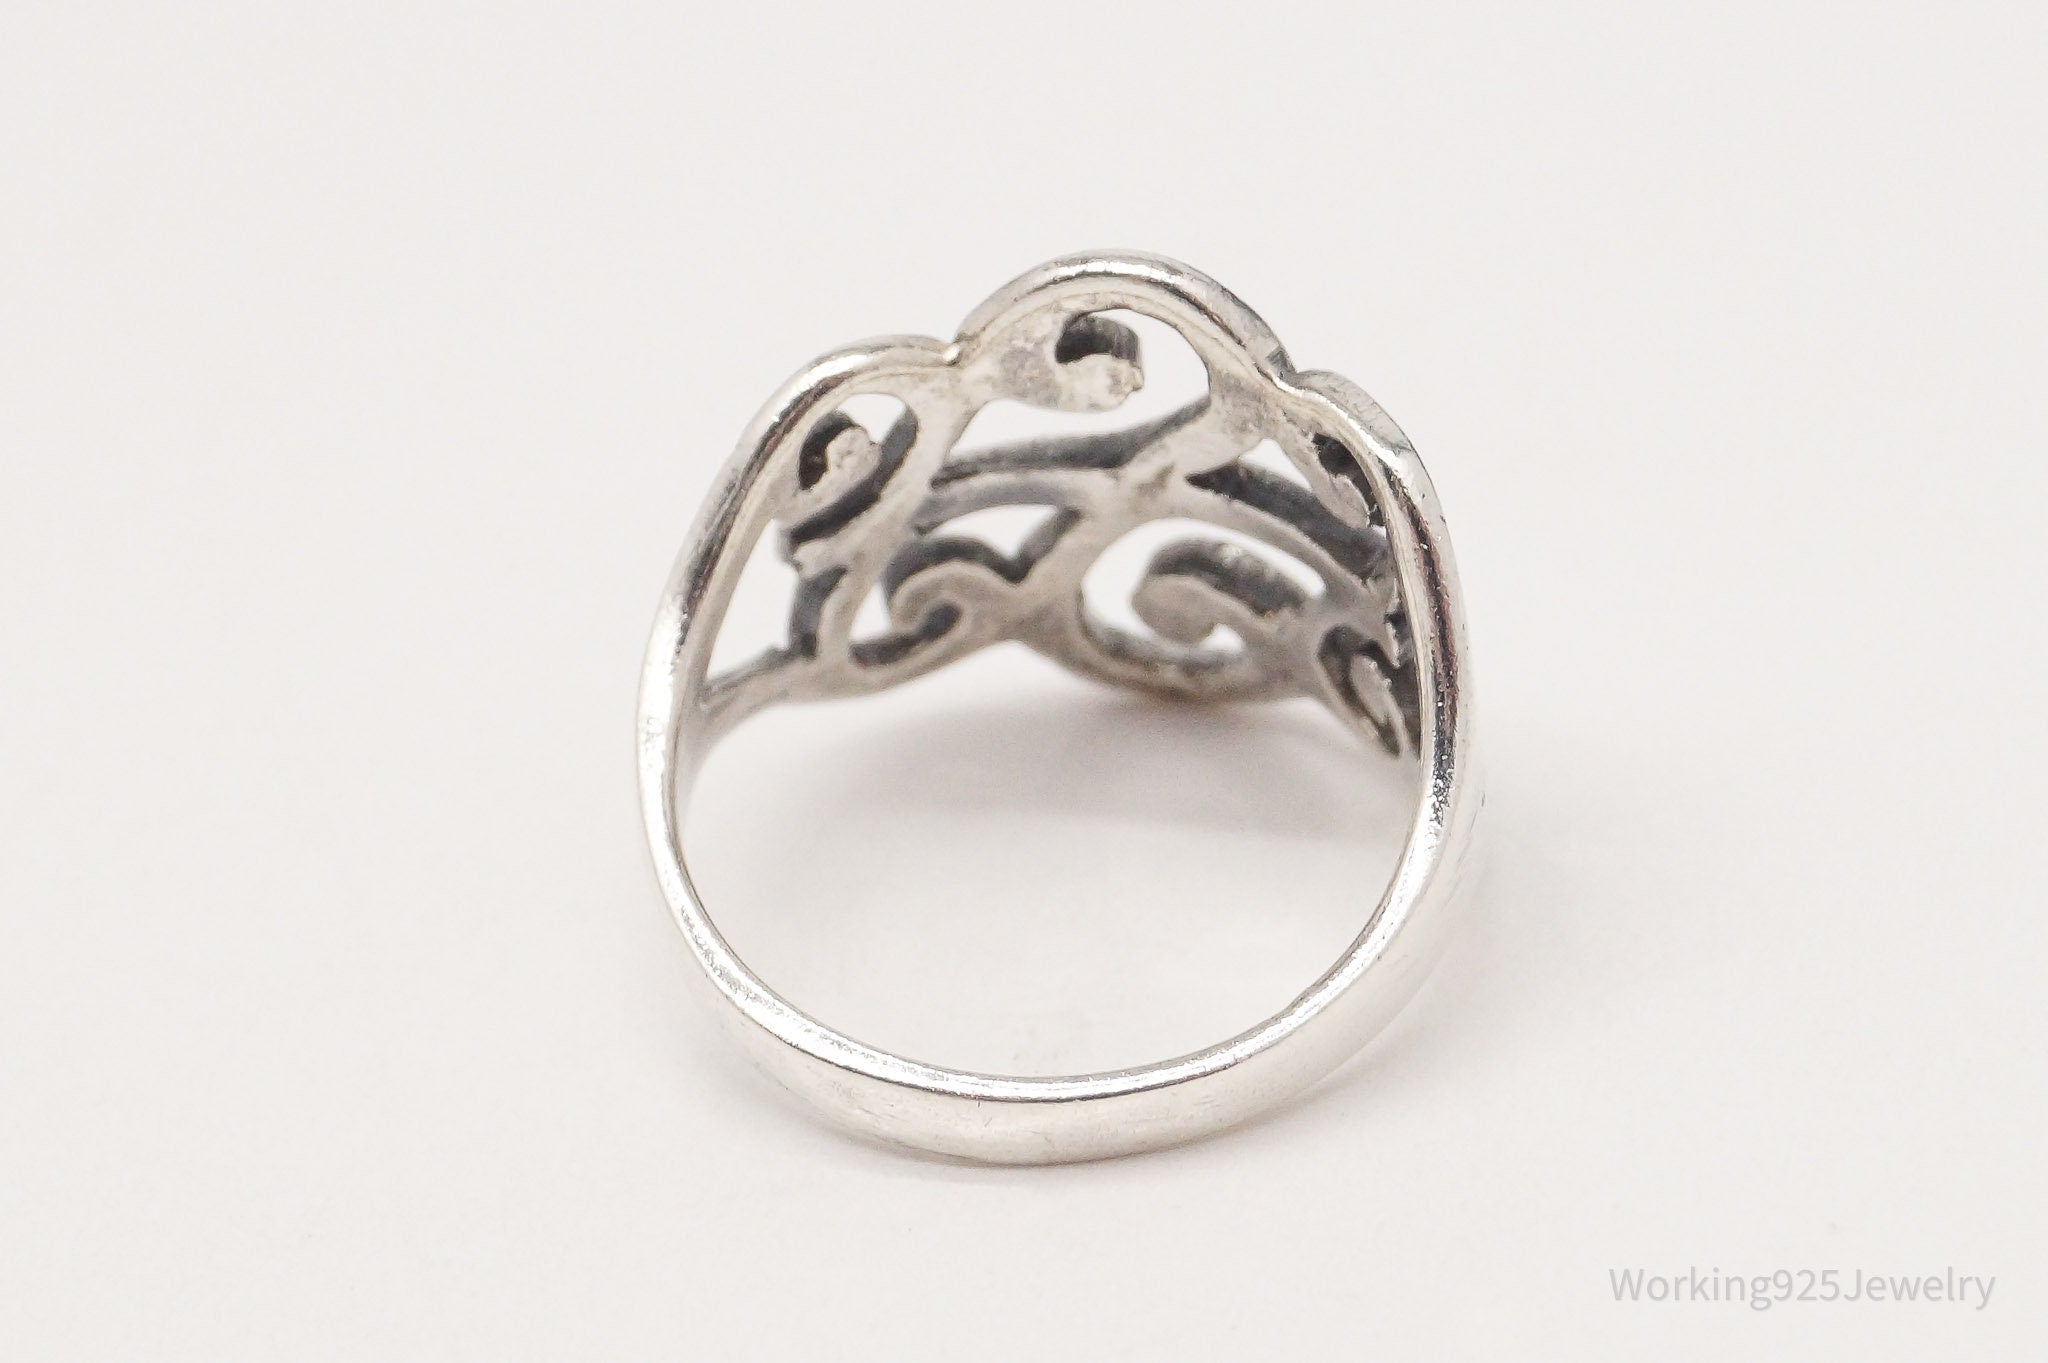 Vintage Scrolls Swirls Openwork Sterling Silver Ring - Size 5